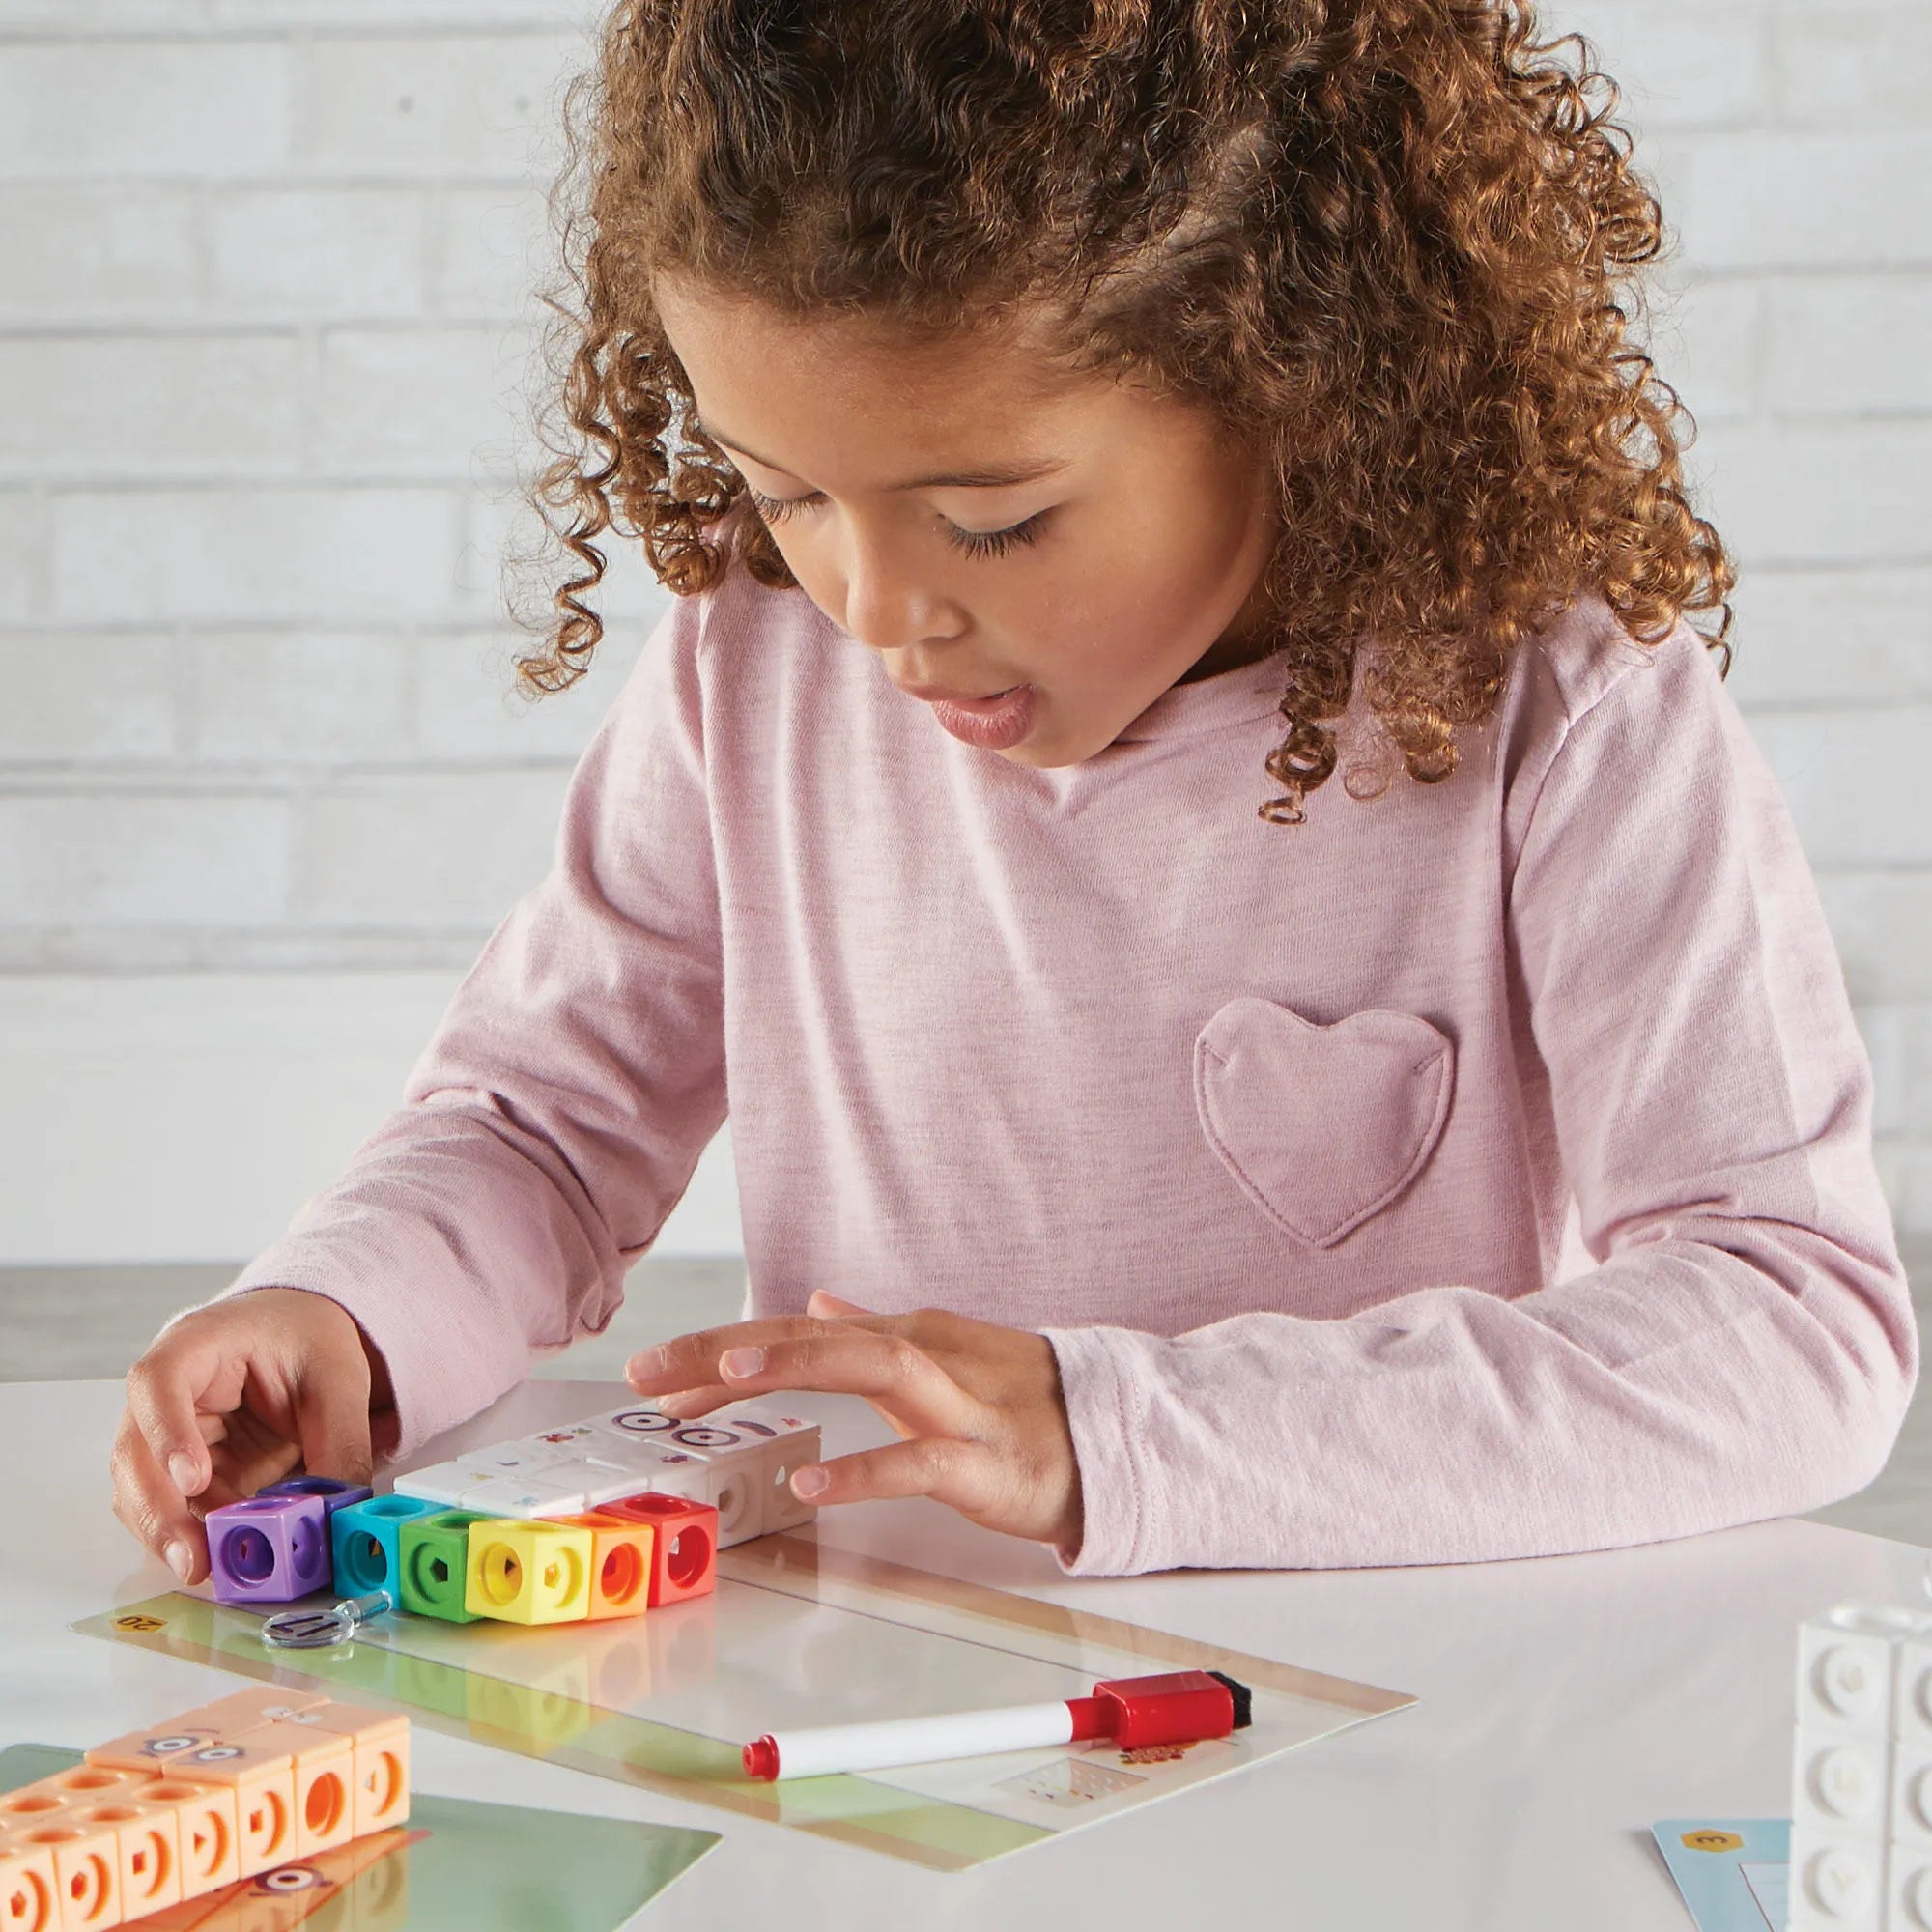 Mathlink® Cubes Preschool Activity Set